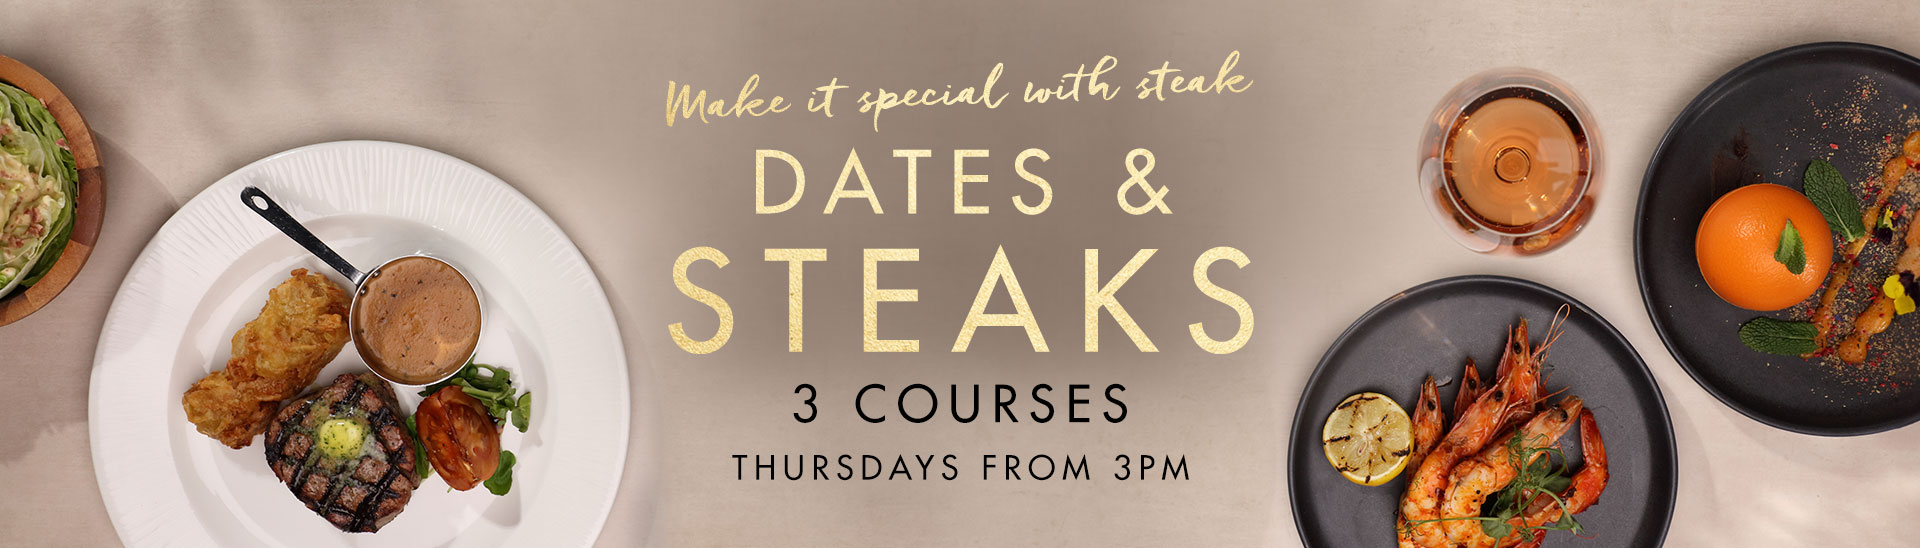 Dates & Steaks at Miller & Carter Resorts World